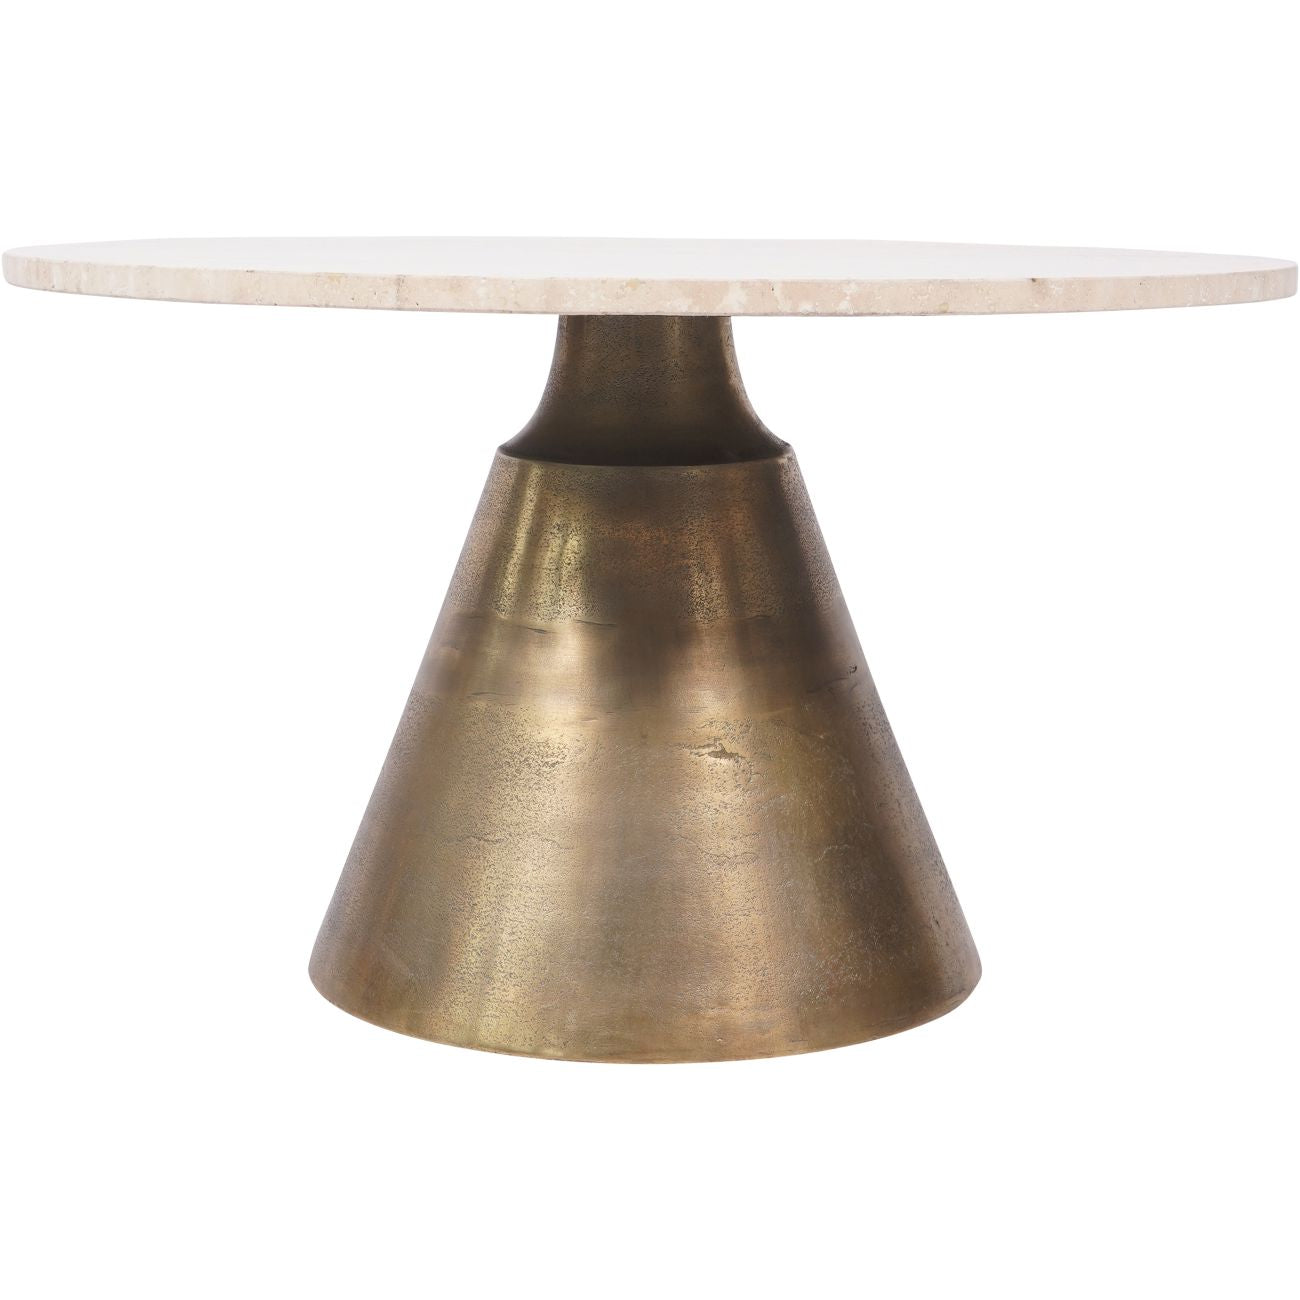 CAVA Antique Brass and Light Travertine Coffee Table Small 60cm